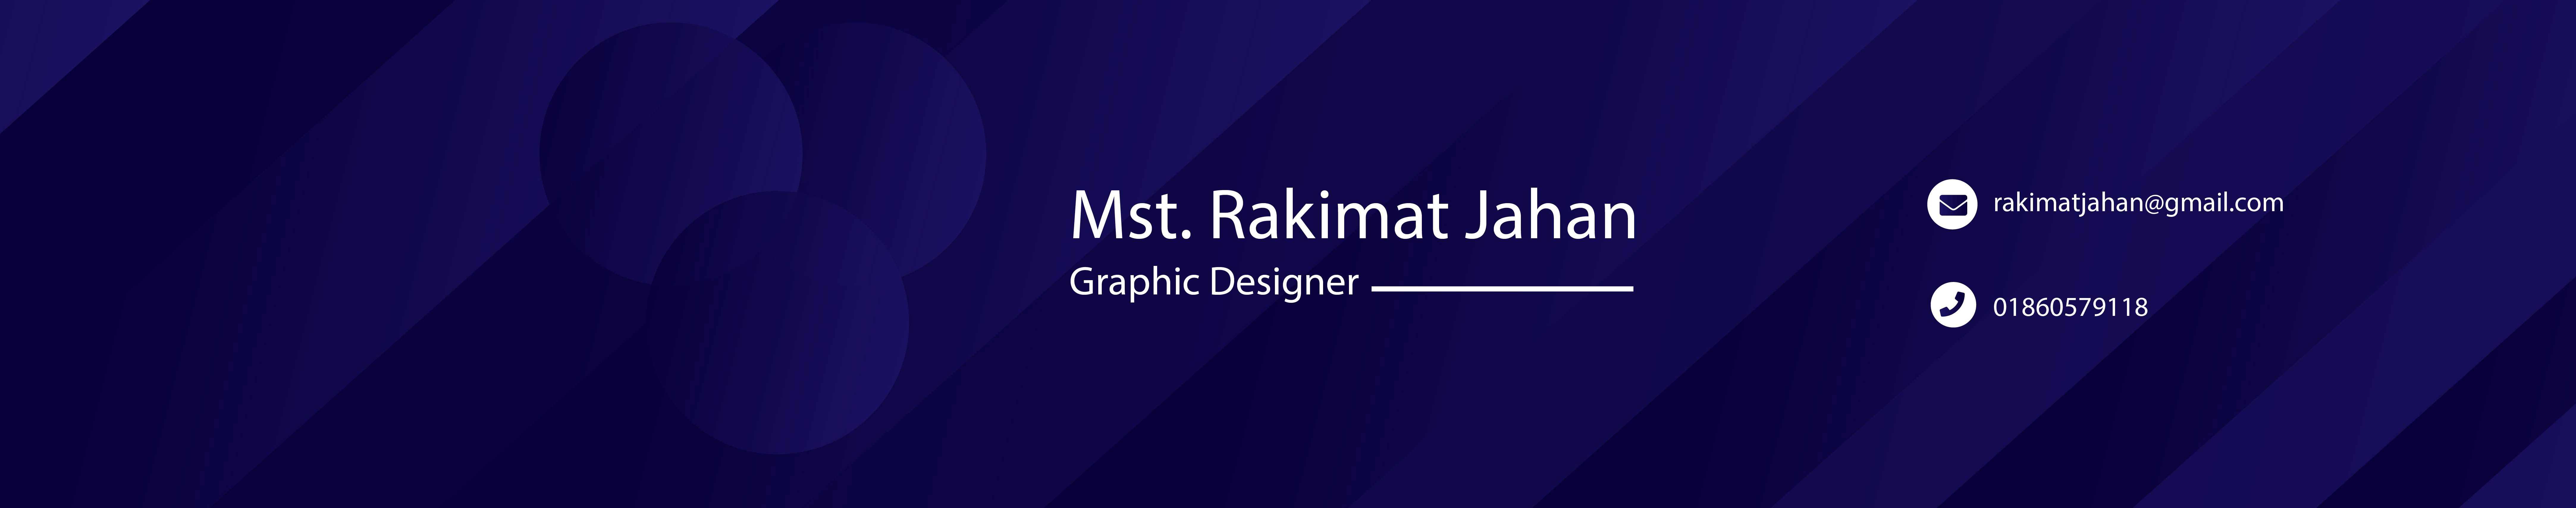 Banner de perfil de Mst. Rakimat Jahan